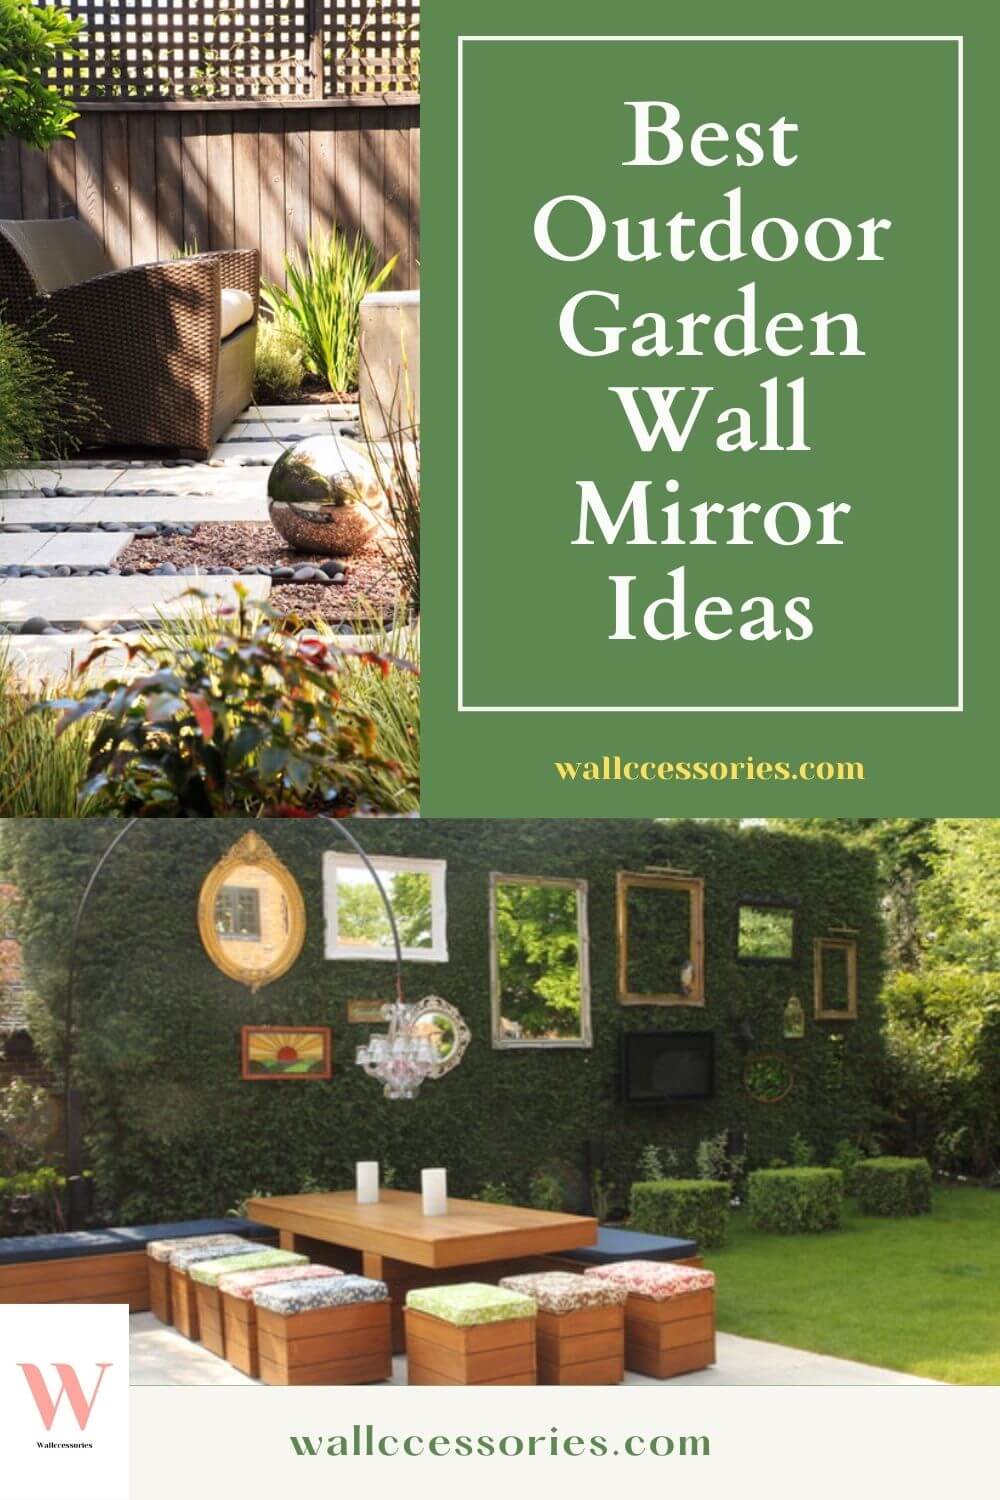 Best Outdoor Garden Wall Mirror Ideas pinterest